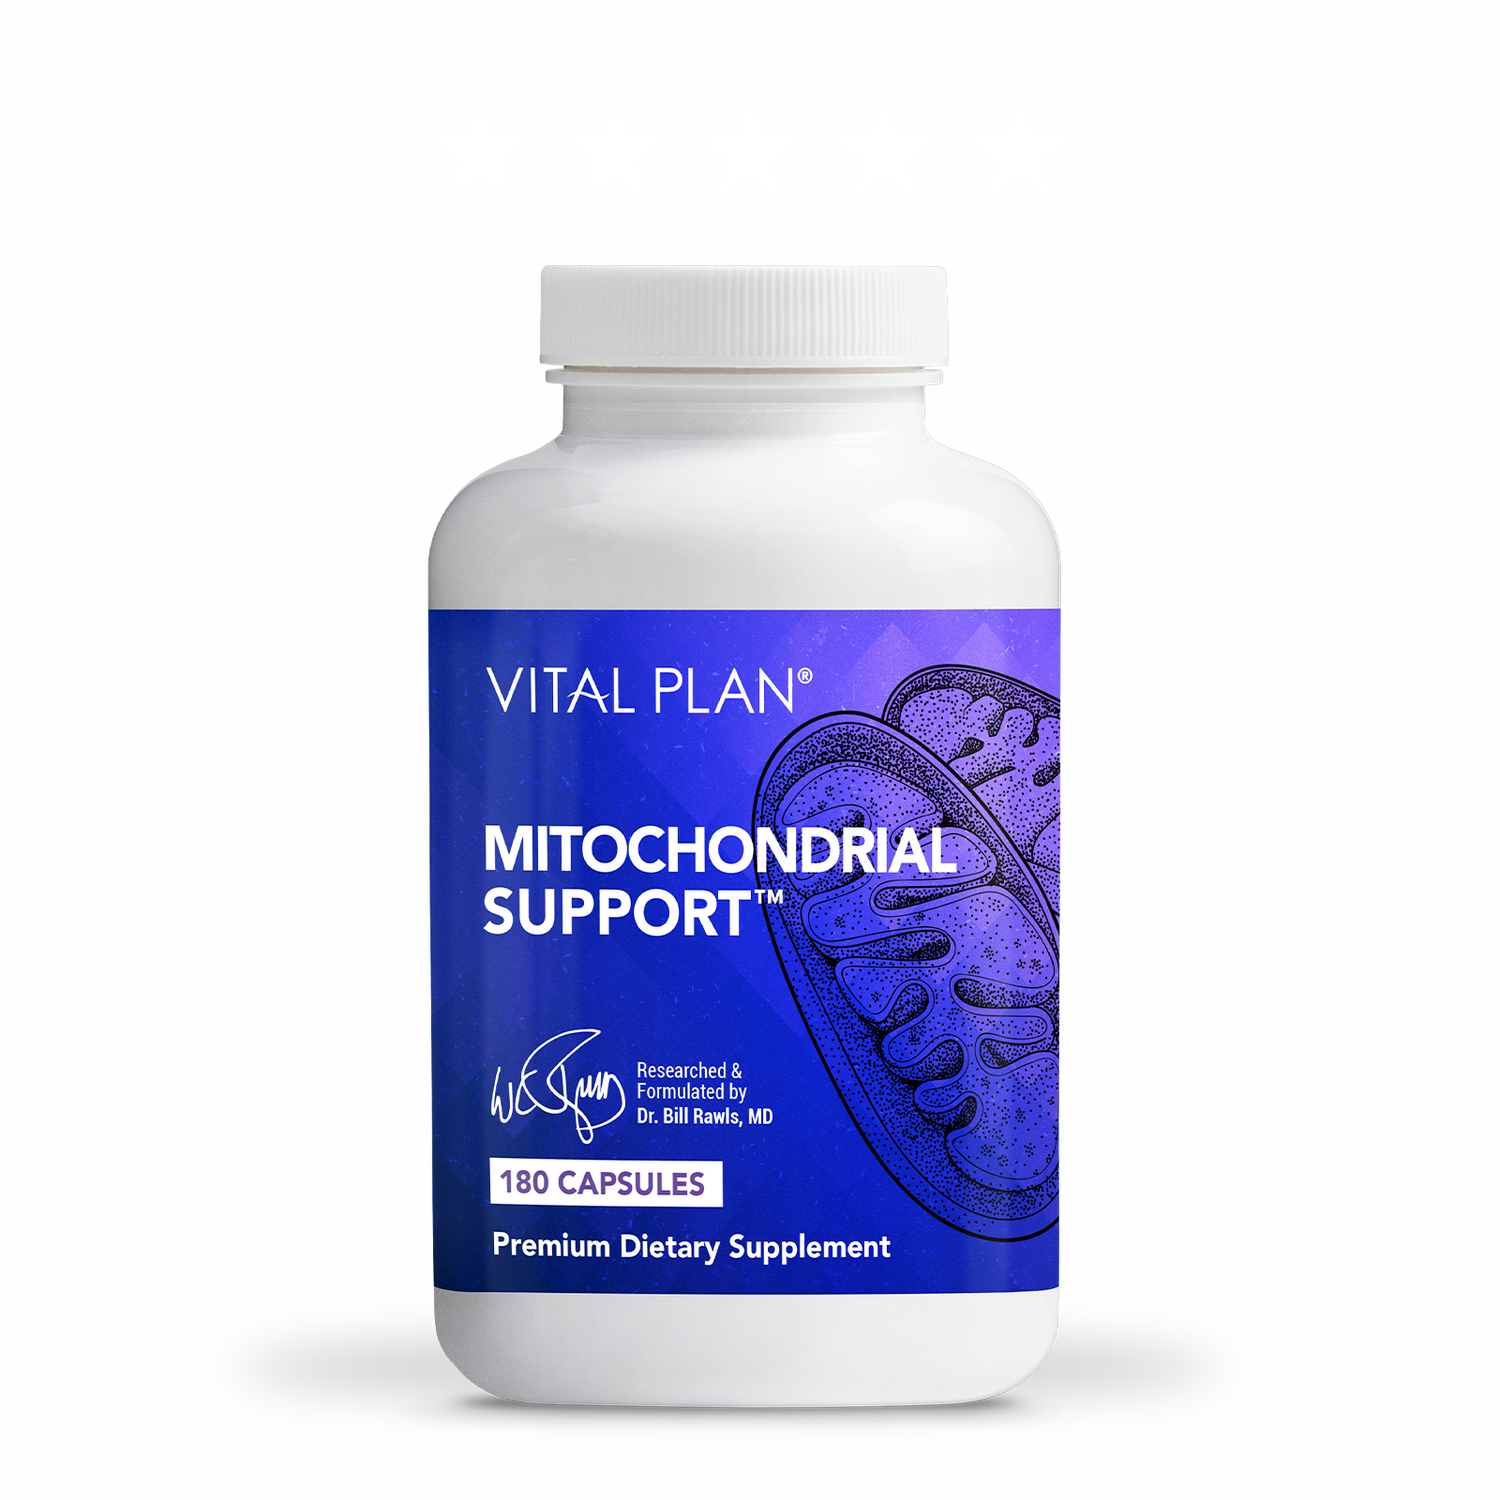 Mitochondrial-Support-5-stars - Vital Plan